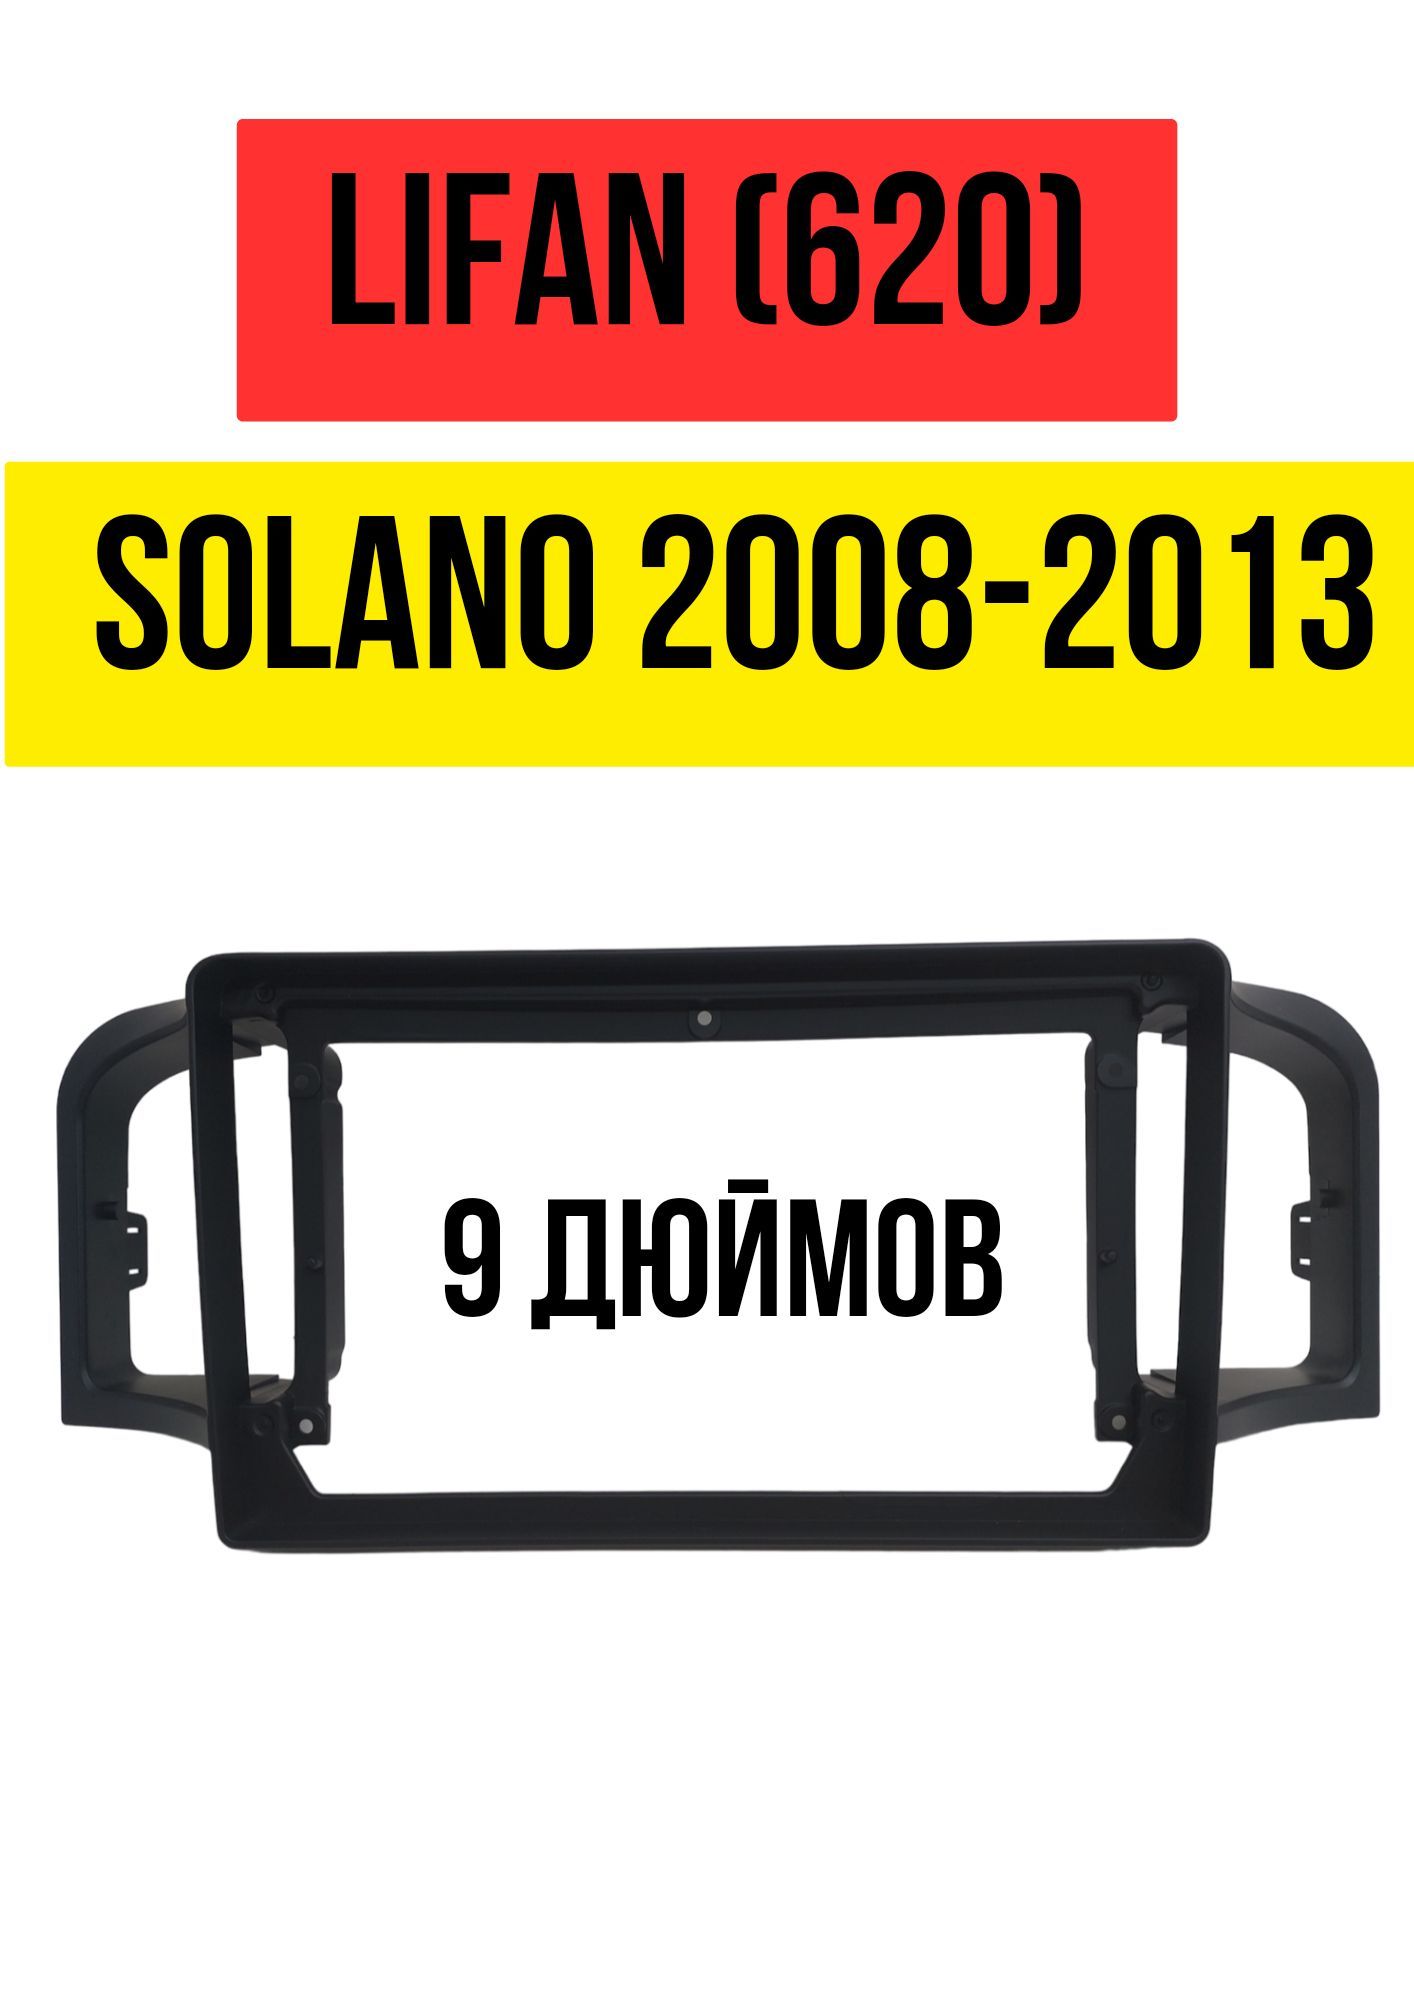 ПереходнаярамкадляустановкимагнитолынаLifan(620),Solano2008-2013(9дюймов)2DIN